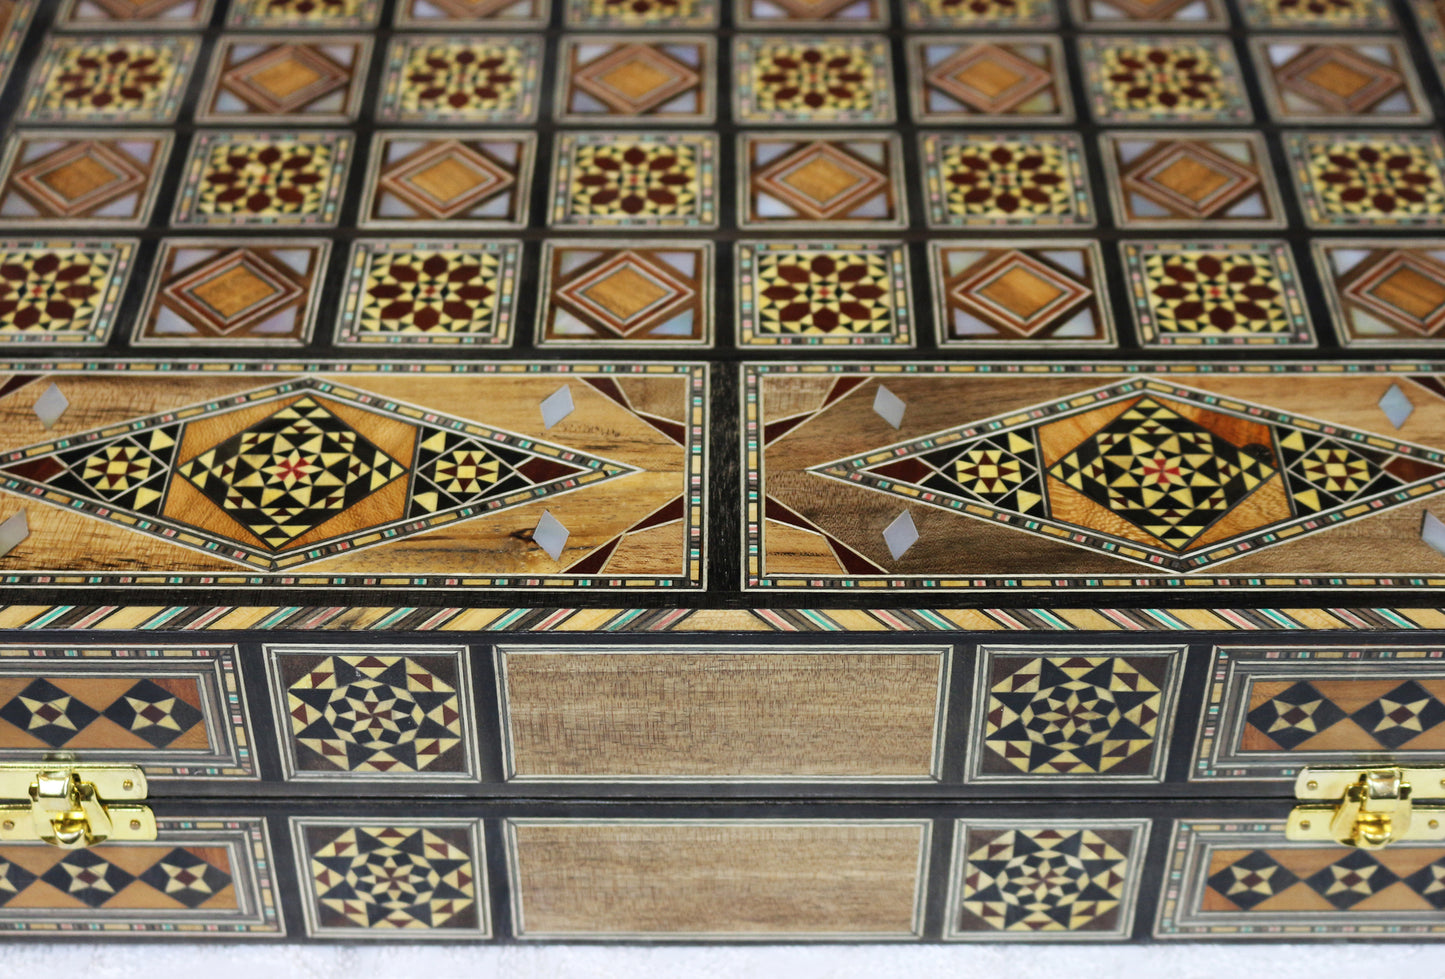 Neu 50x50 cm Holz Backgammon/Schachspiel/Tavla Brett  BT 505 mit Holz Backgammon Steine